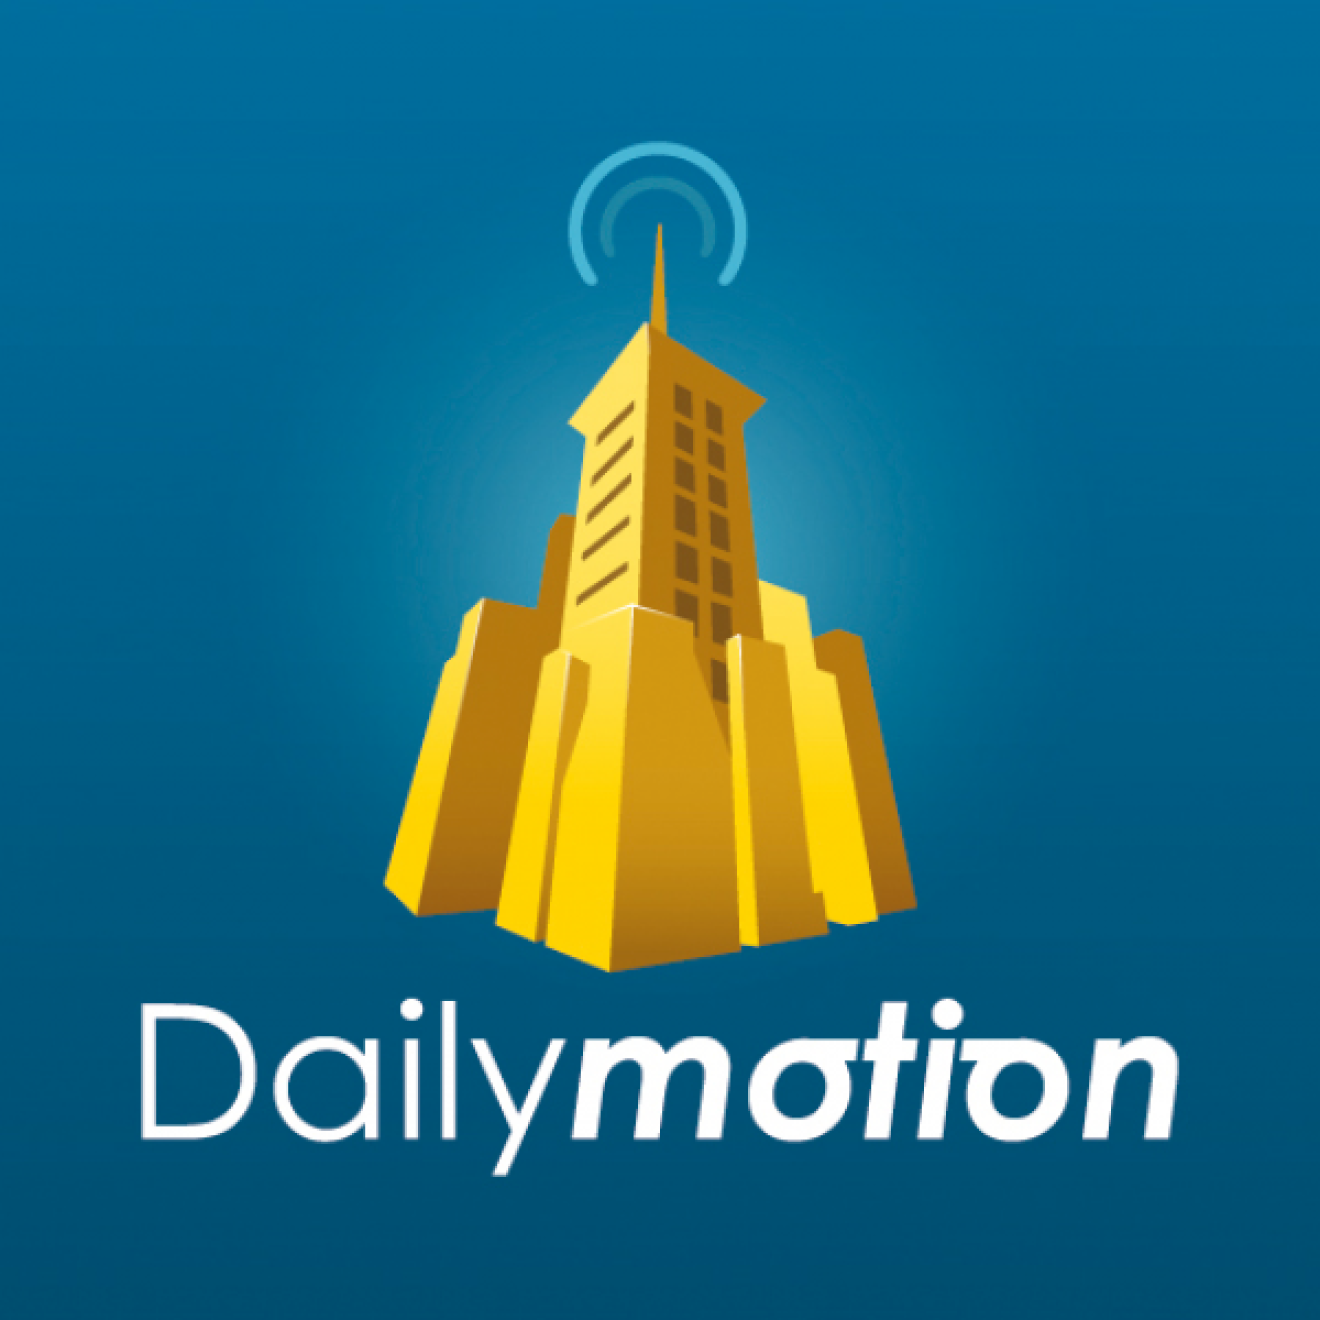 1000 Dailymotion Views / Aufrufe für Dich